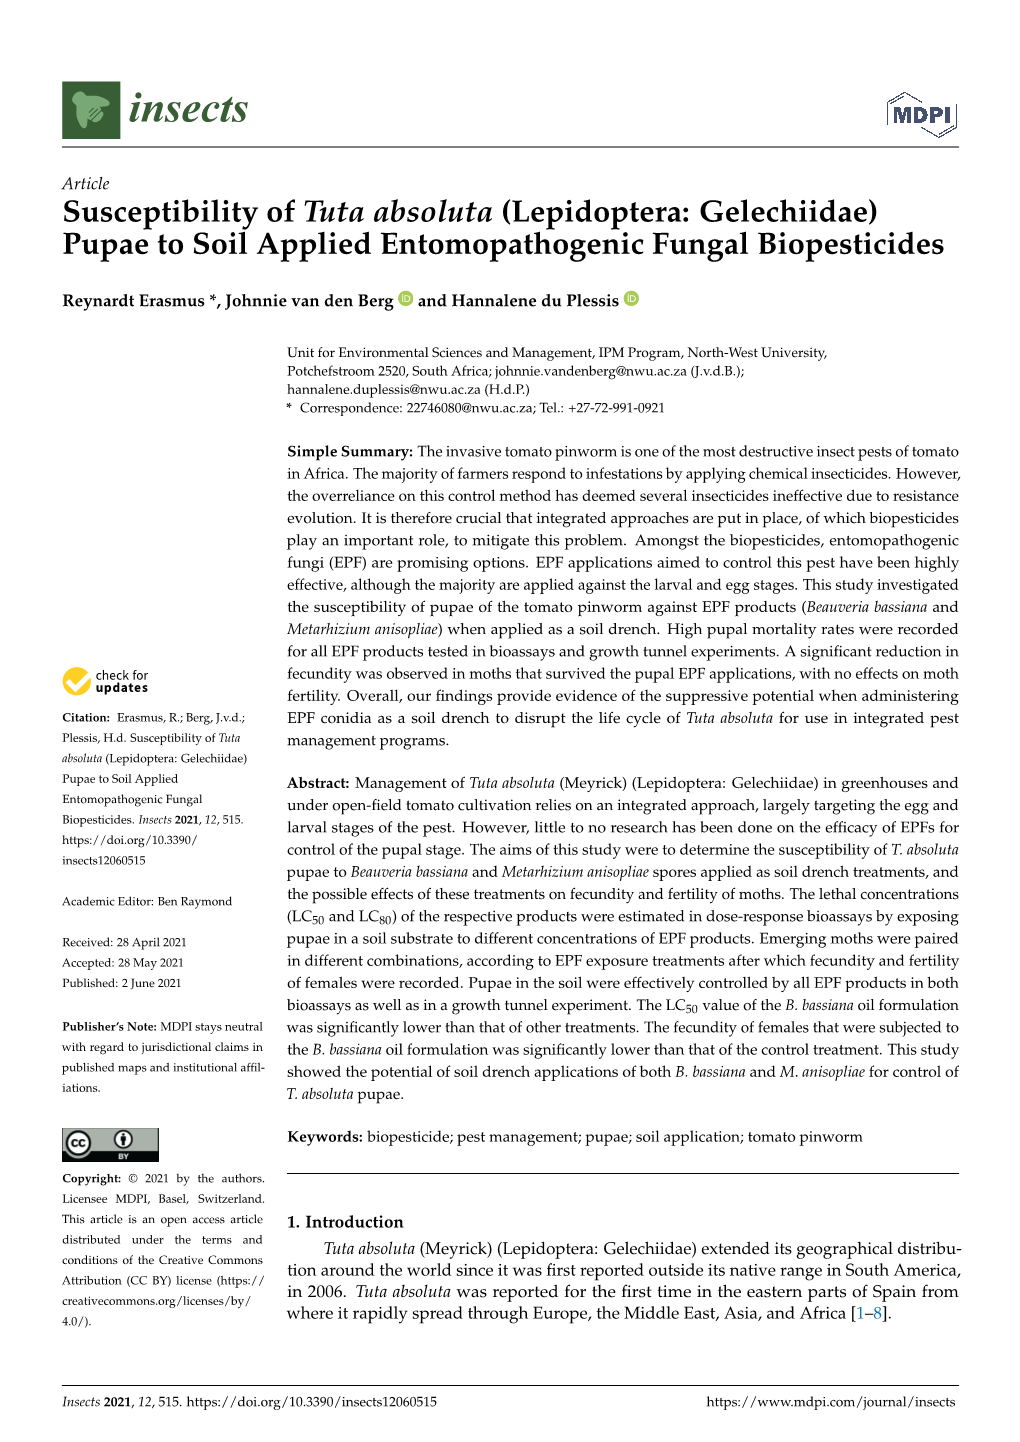 Susceptibility of Tuta Absoluta (Lepidoptera: Gelechiidae) Pupae to Soil Applied Entomopathogenic Fungal Biopesticides